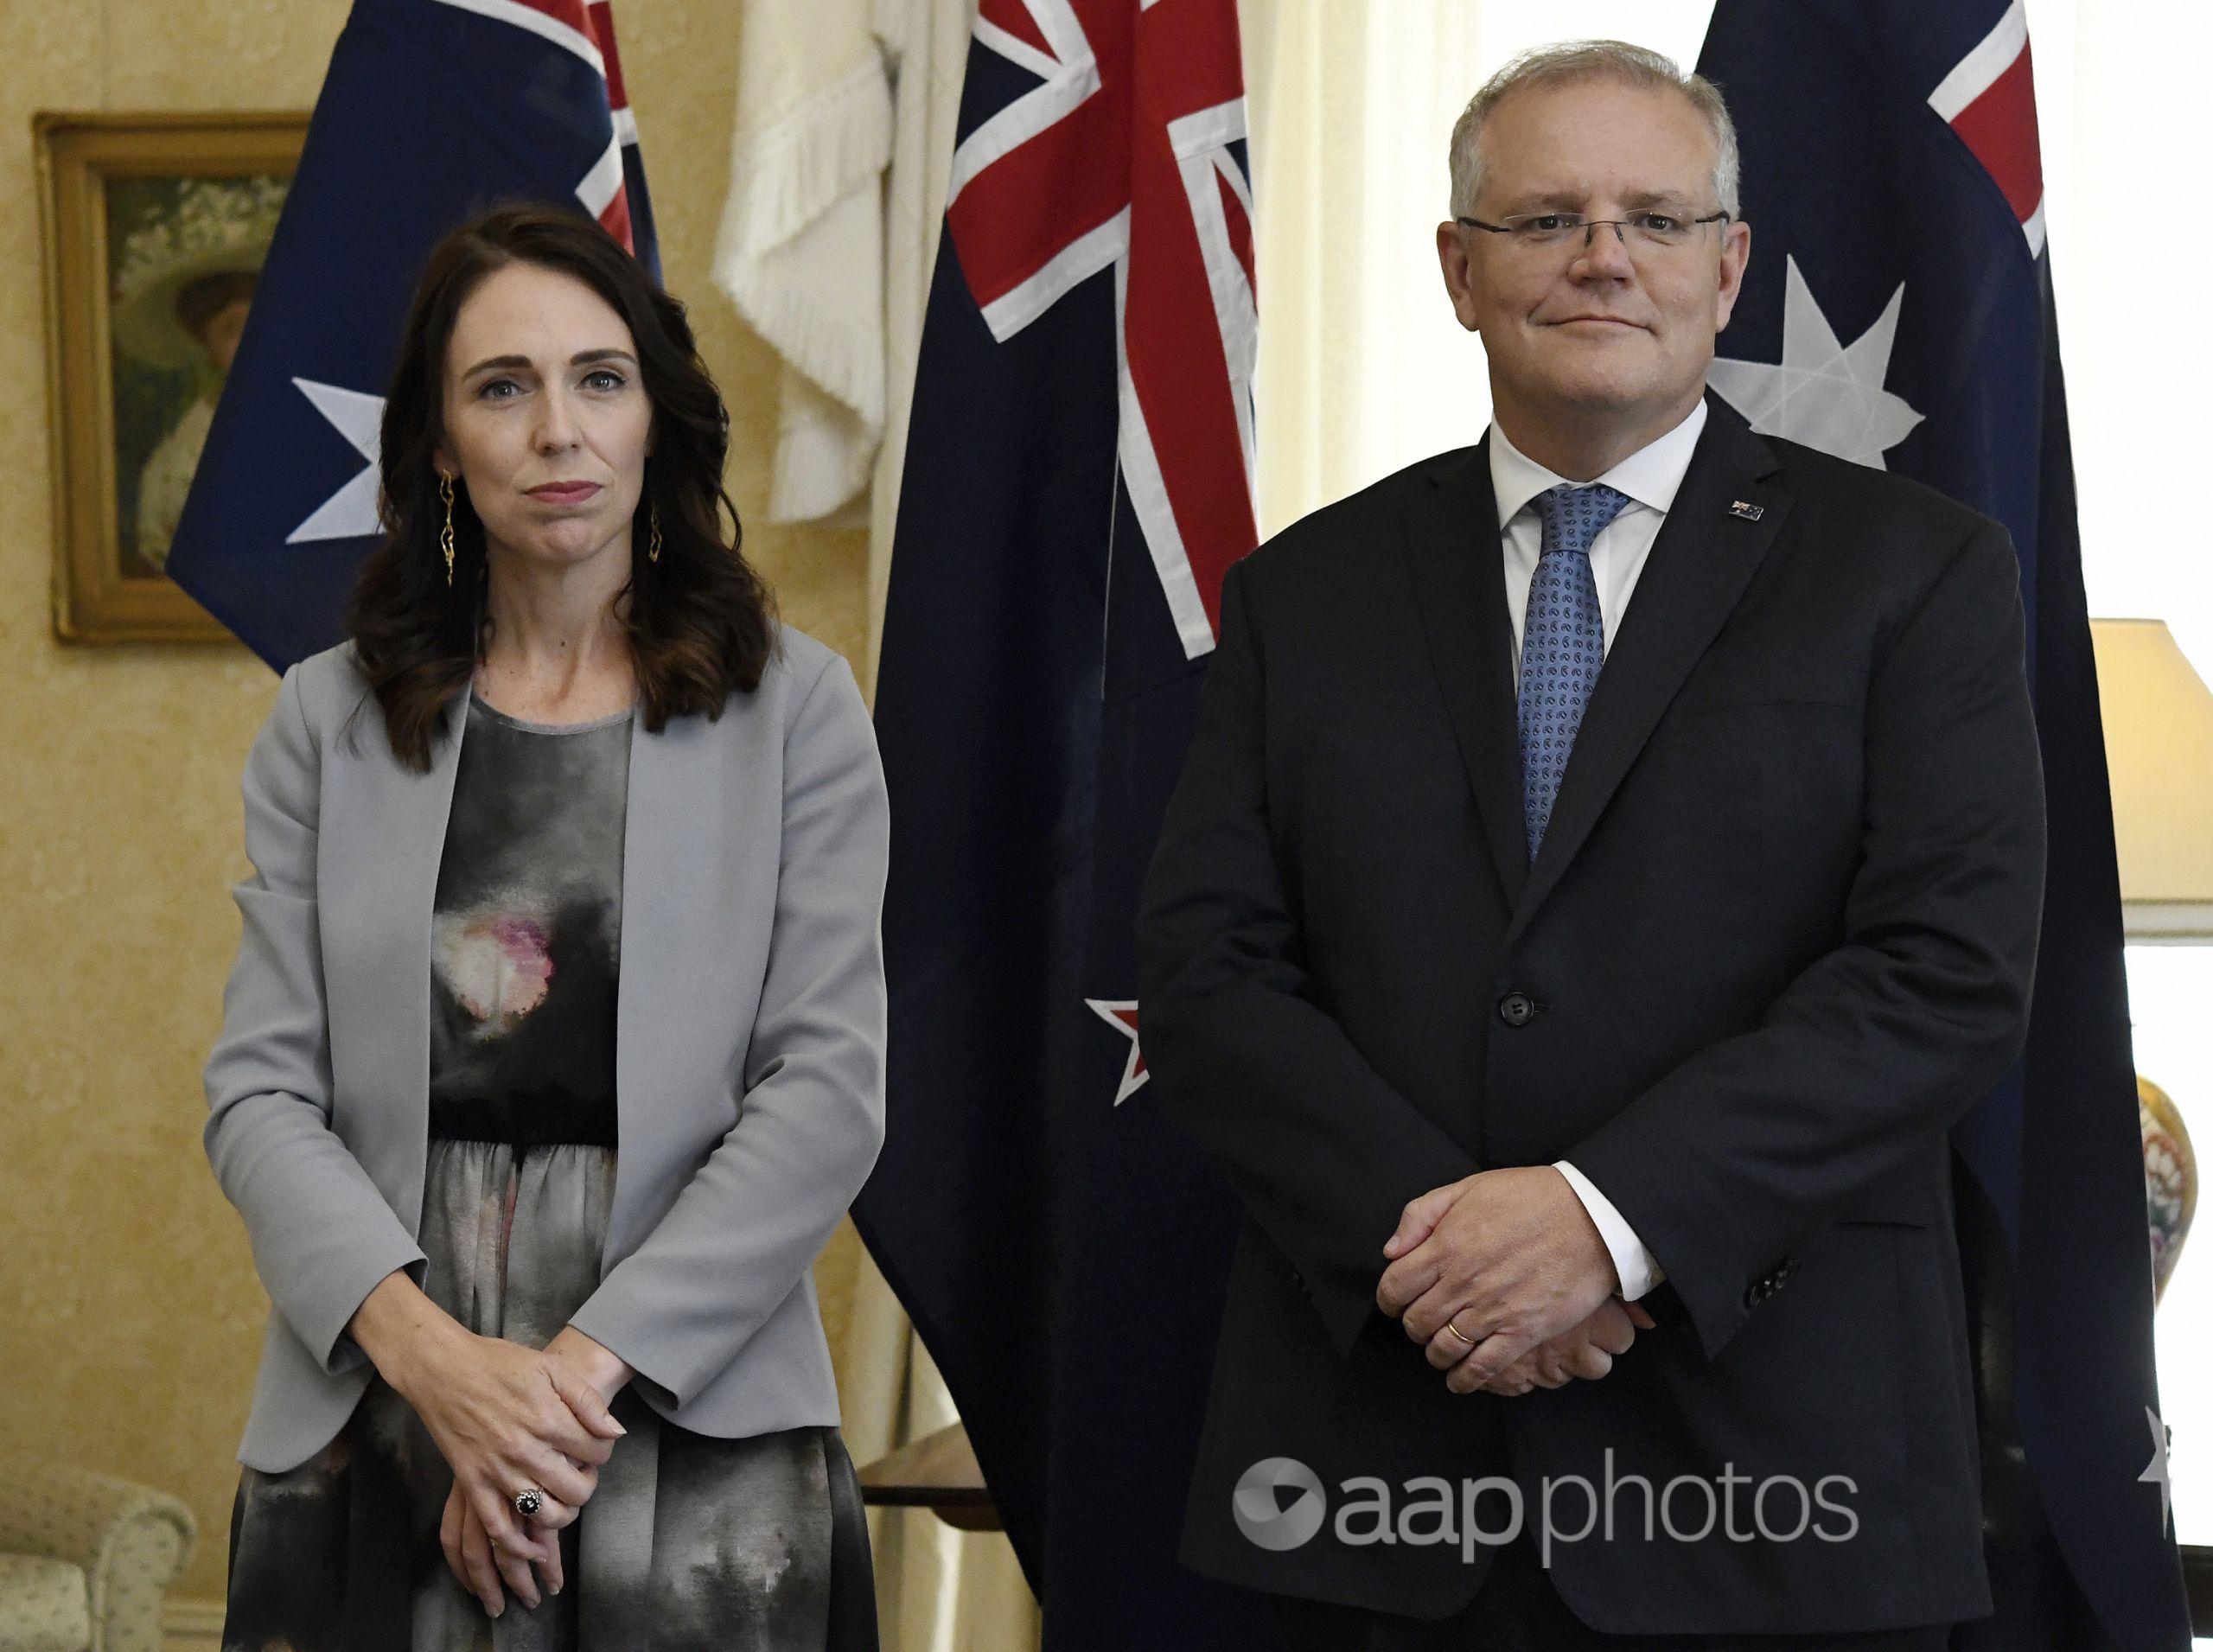 New Zealand leader Jacinda Ardern and Australian leader Scott Morrison